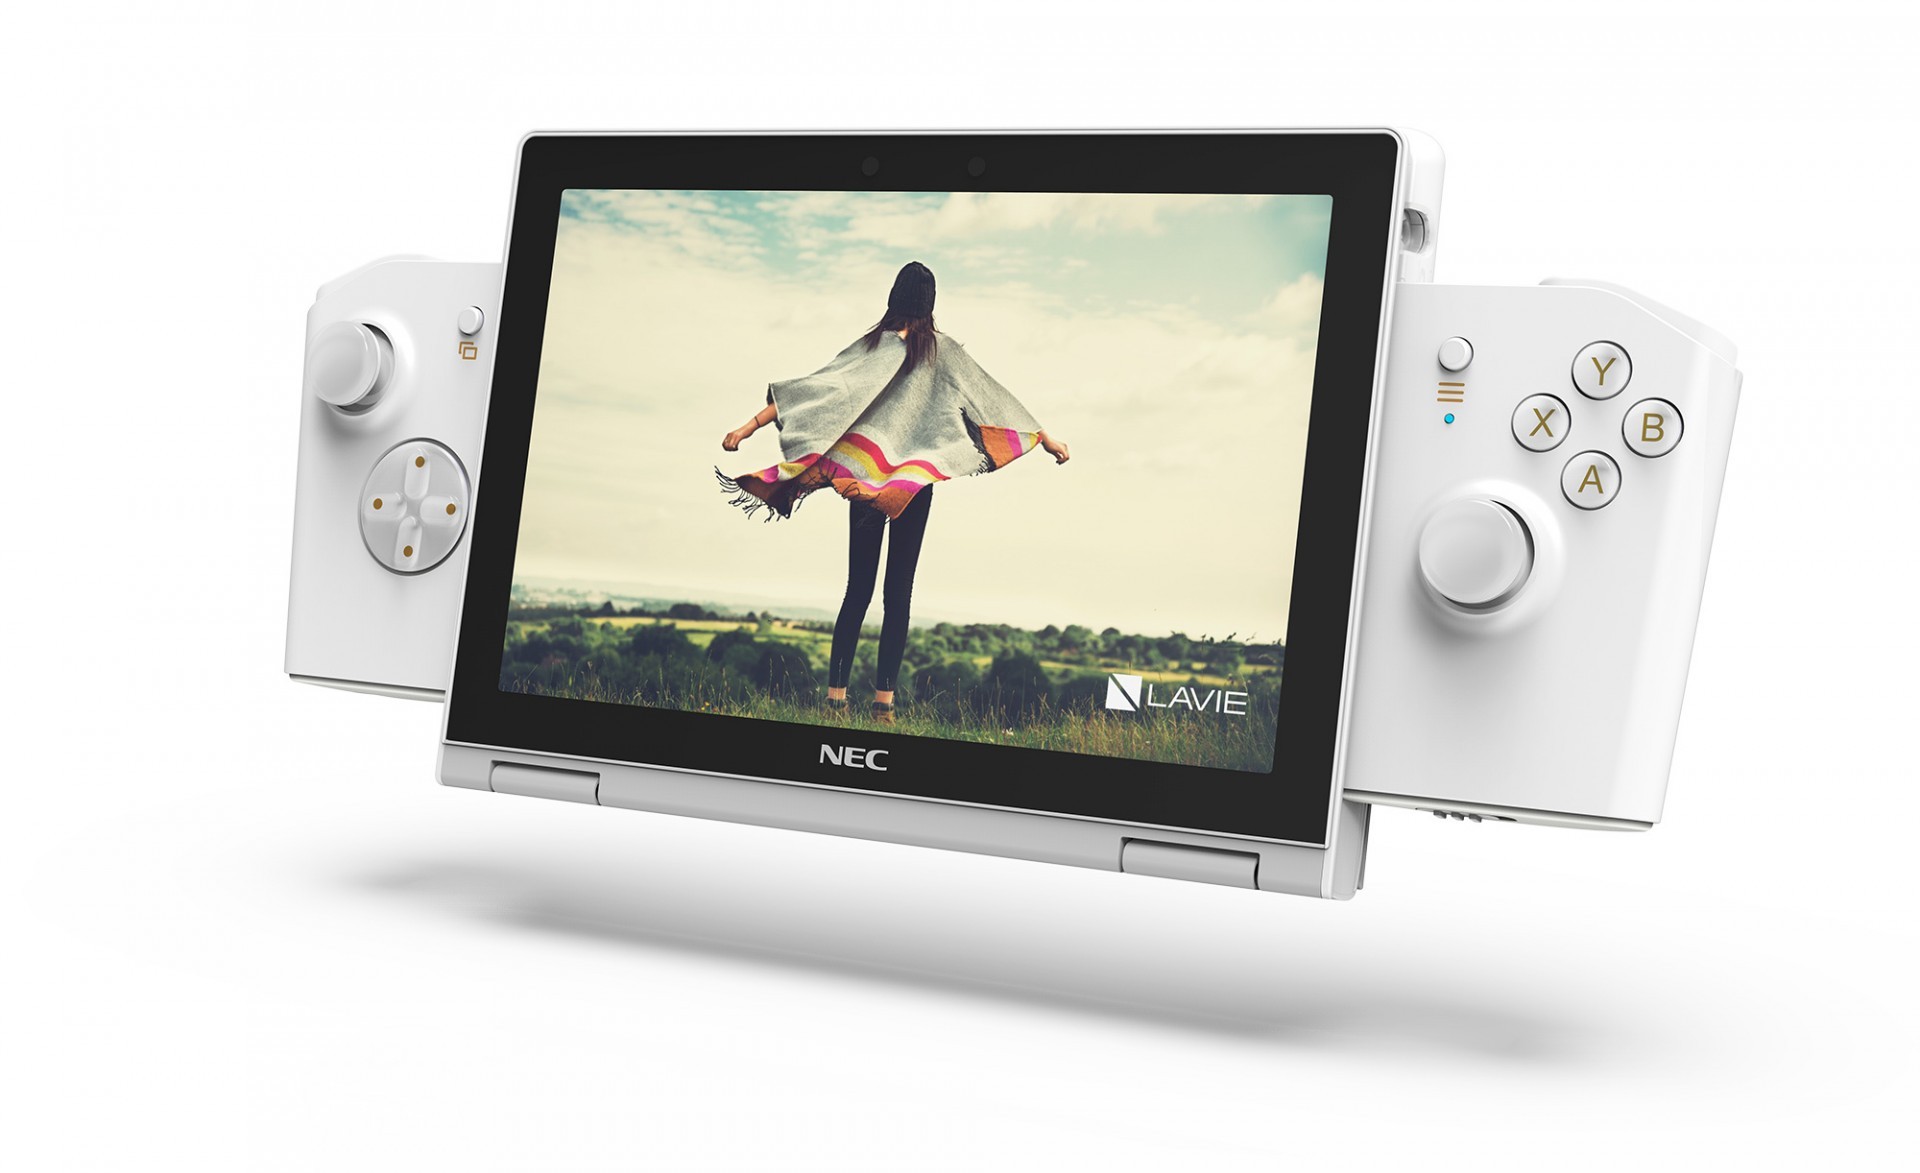 NEC 發表類 Switch 8 吋二合一筆電 支援握把控制器與底座大螢幕輸出